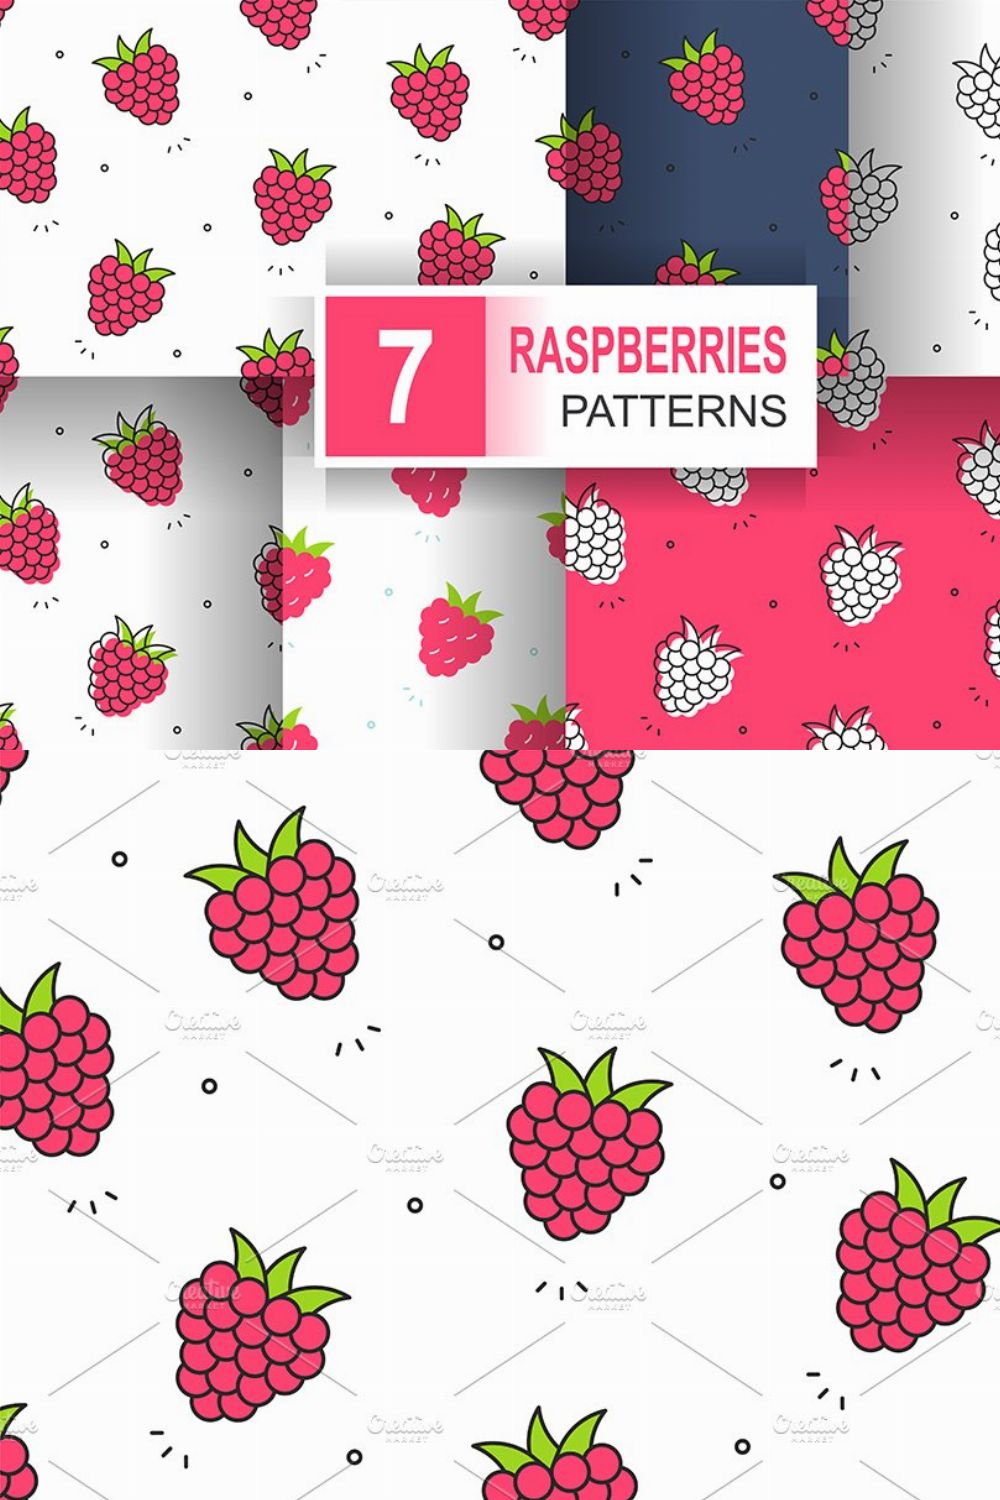 Raspberries patterns pinterest preview image.